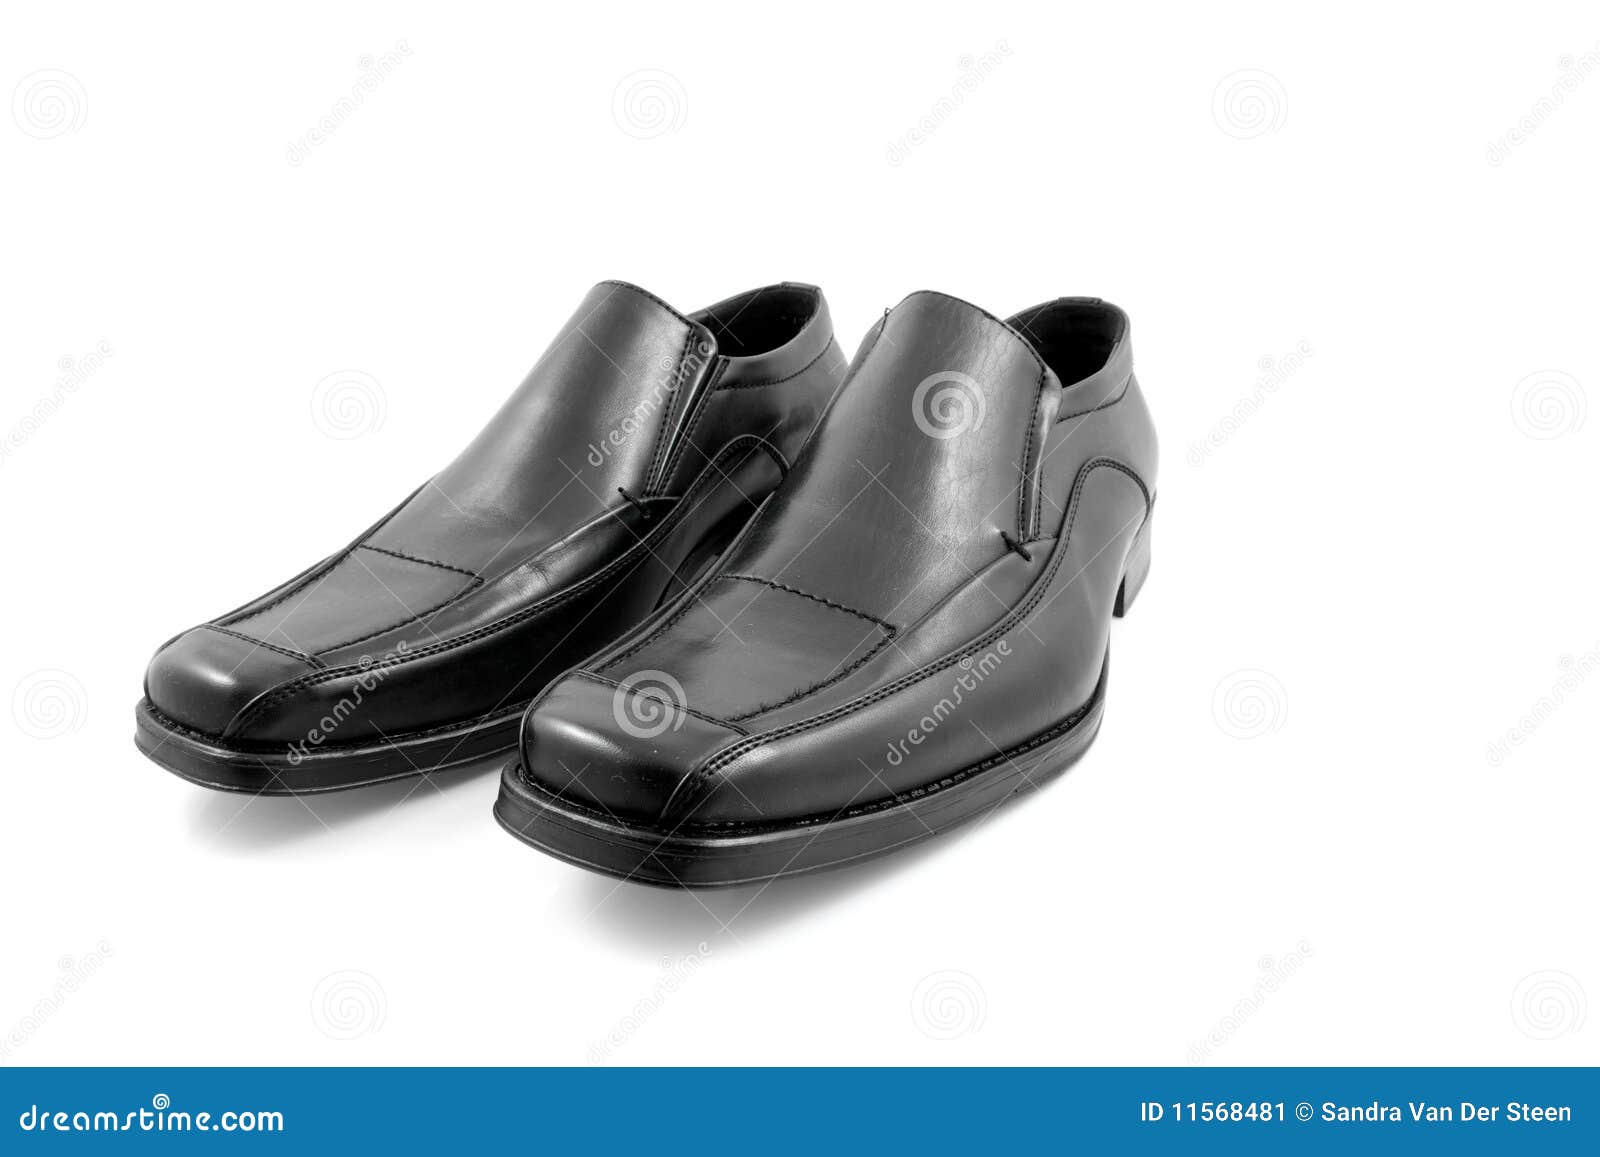 Pair of Black Shiny Men Shoes Stock Image - Image of clothing ...